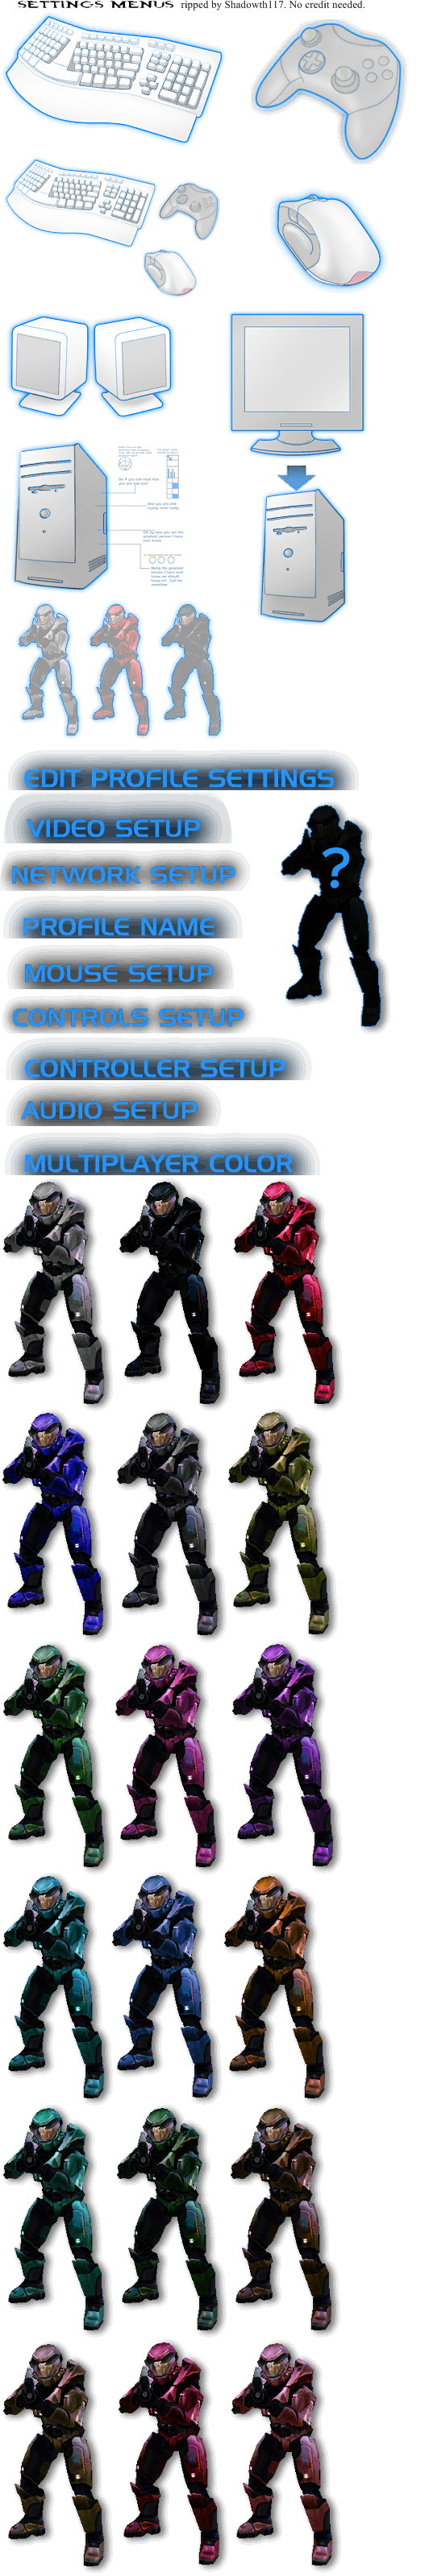 Halo - Combat Evolved - Settings Menu